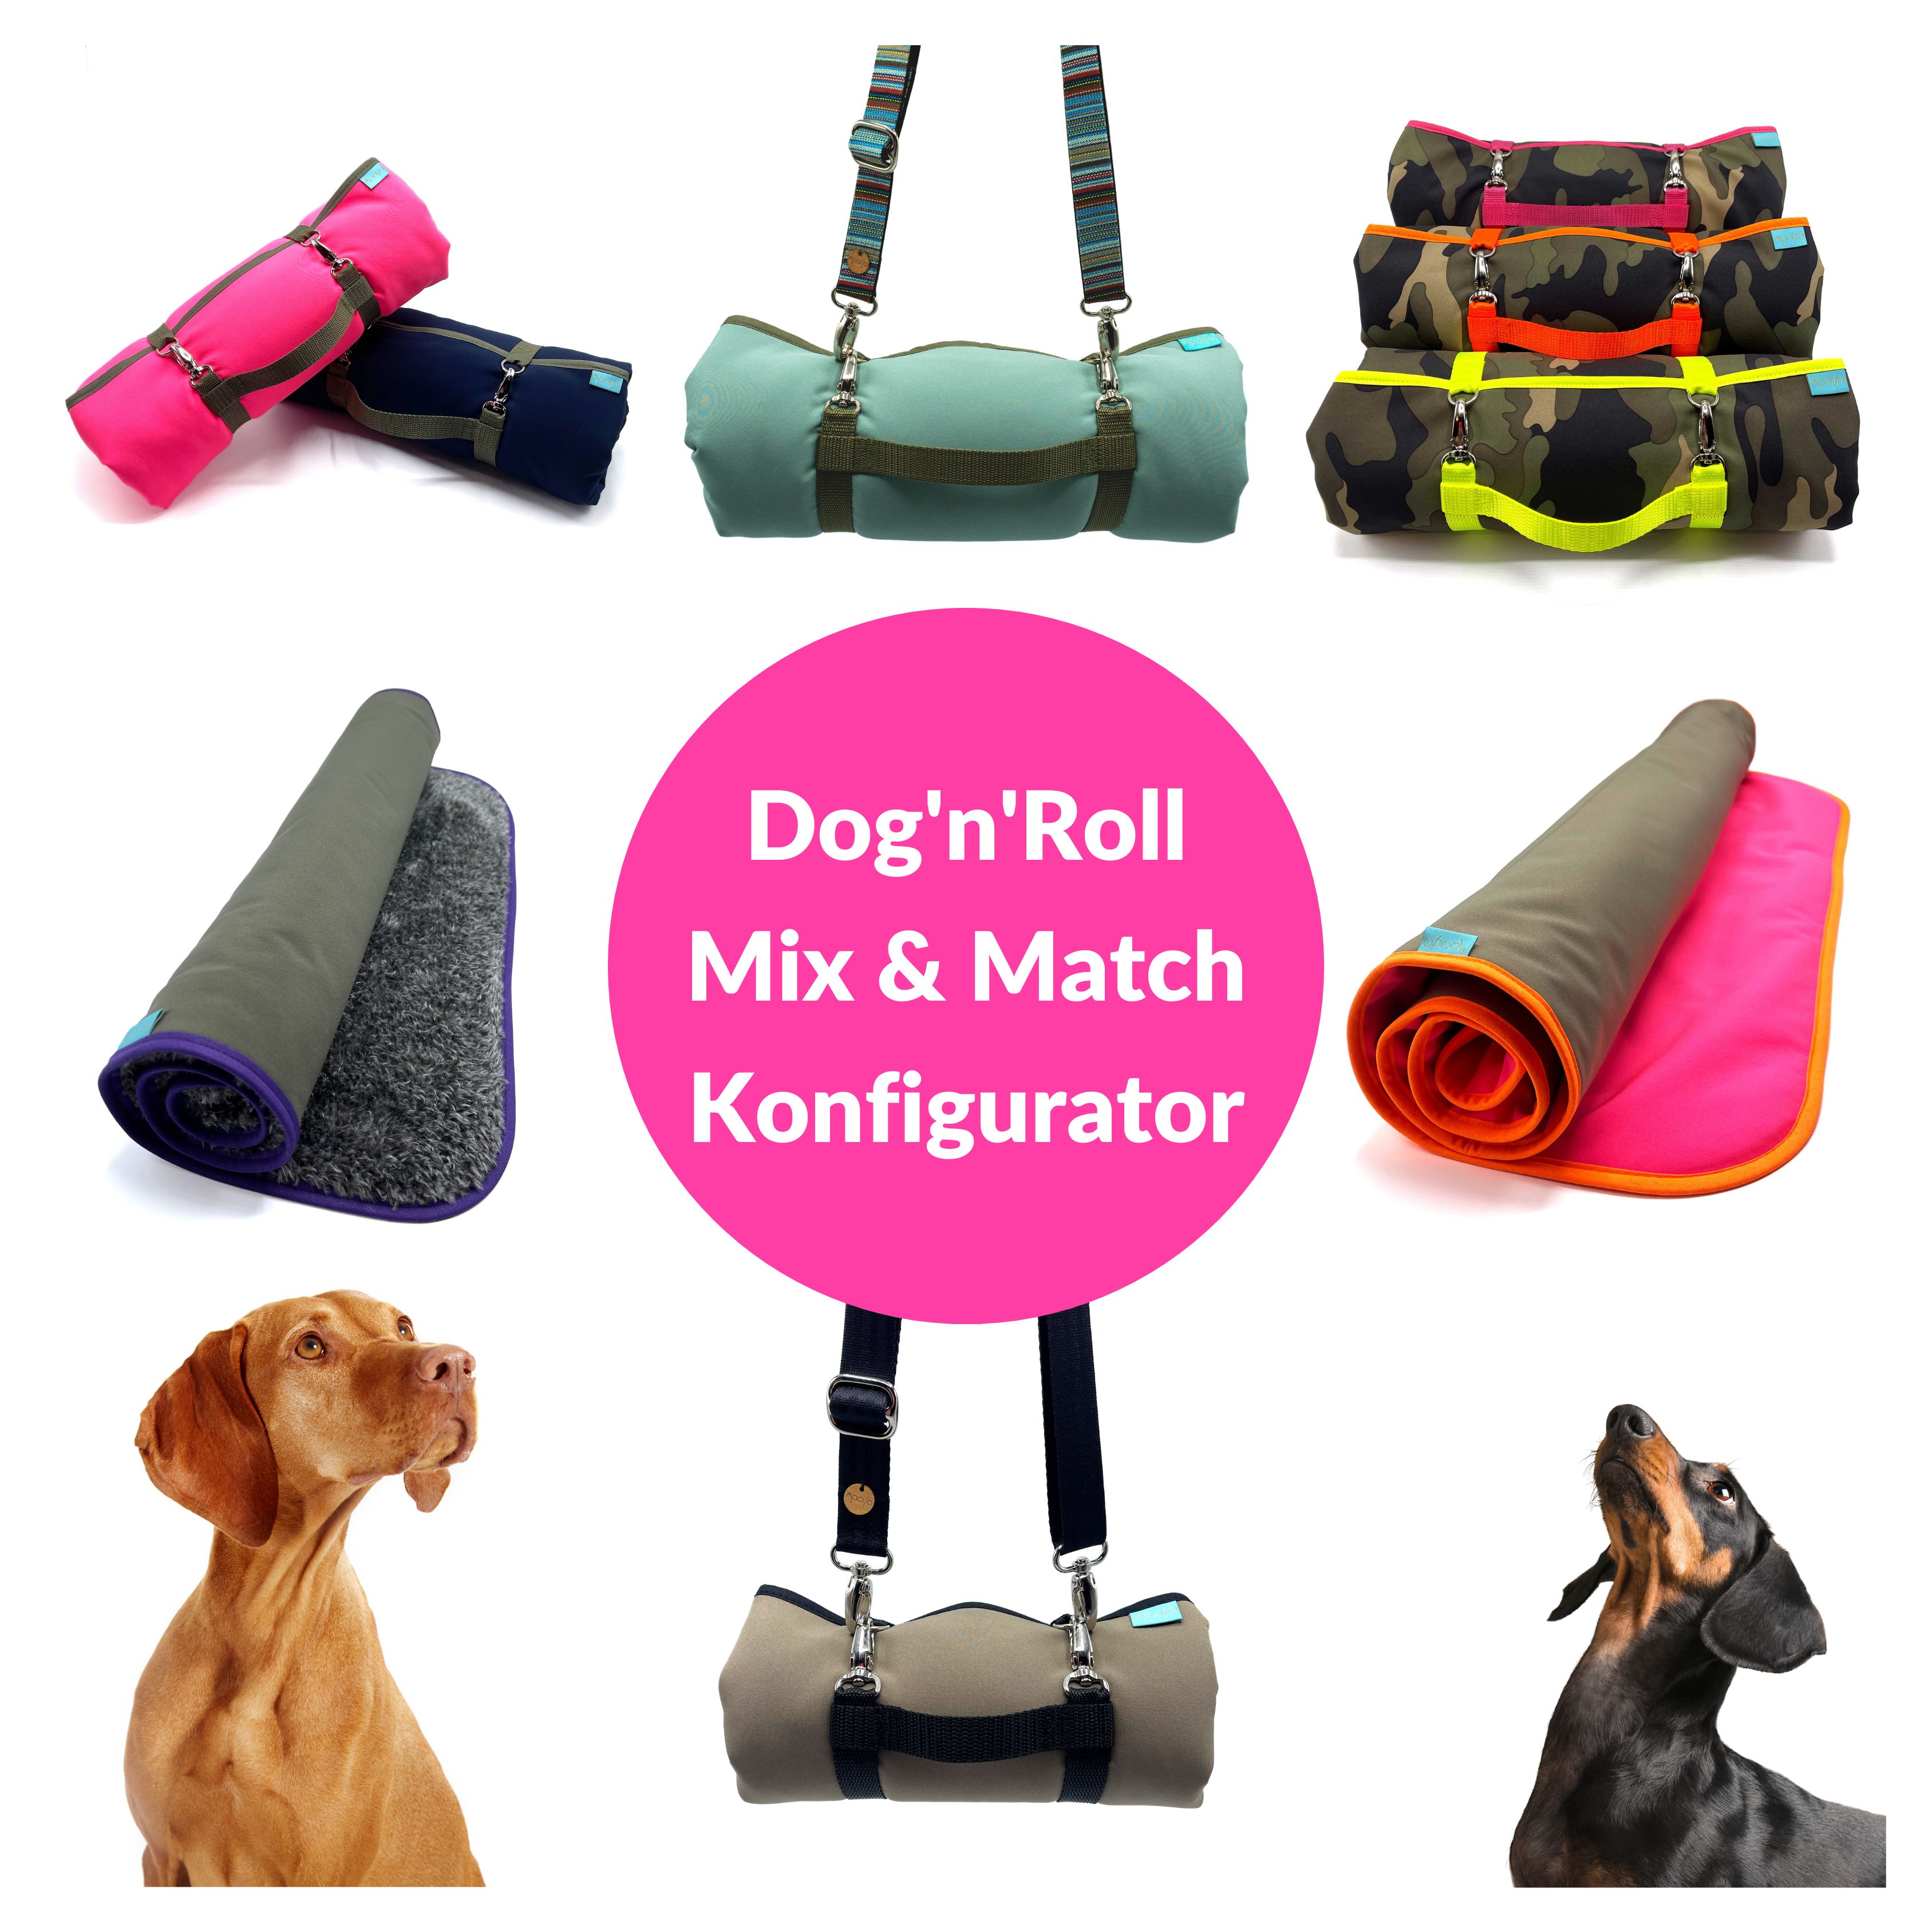 Dog'n'Roll ★ Mix & Match ★ Konfigurator